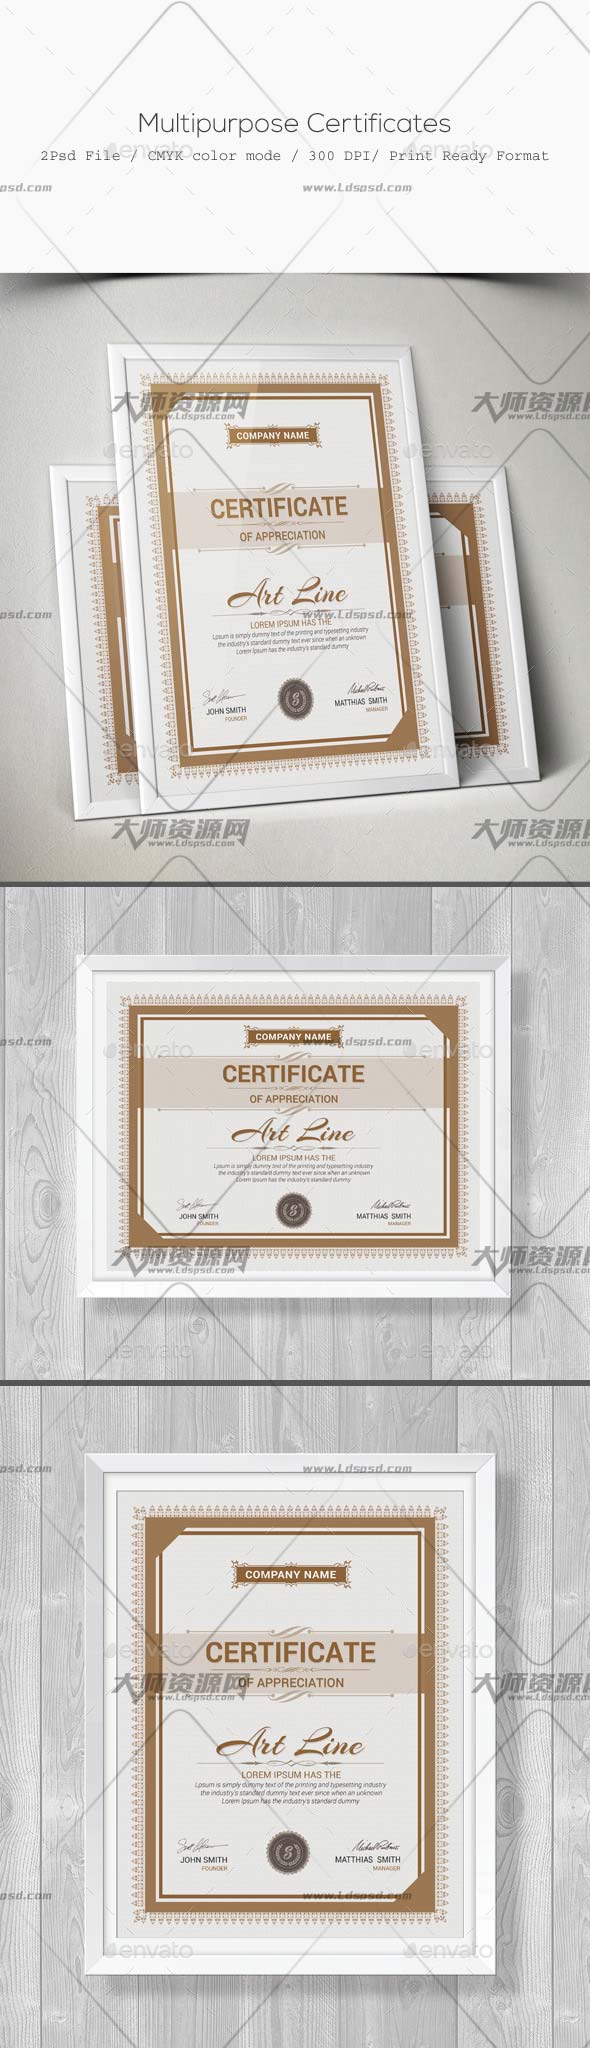 Multipurpose Certificates,通用型证书模板